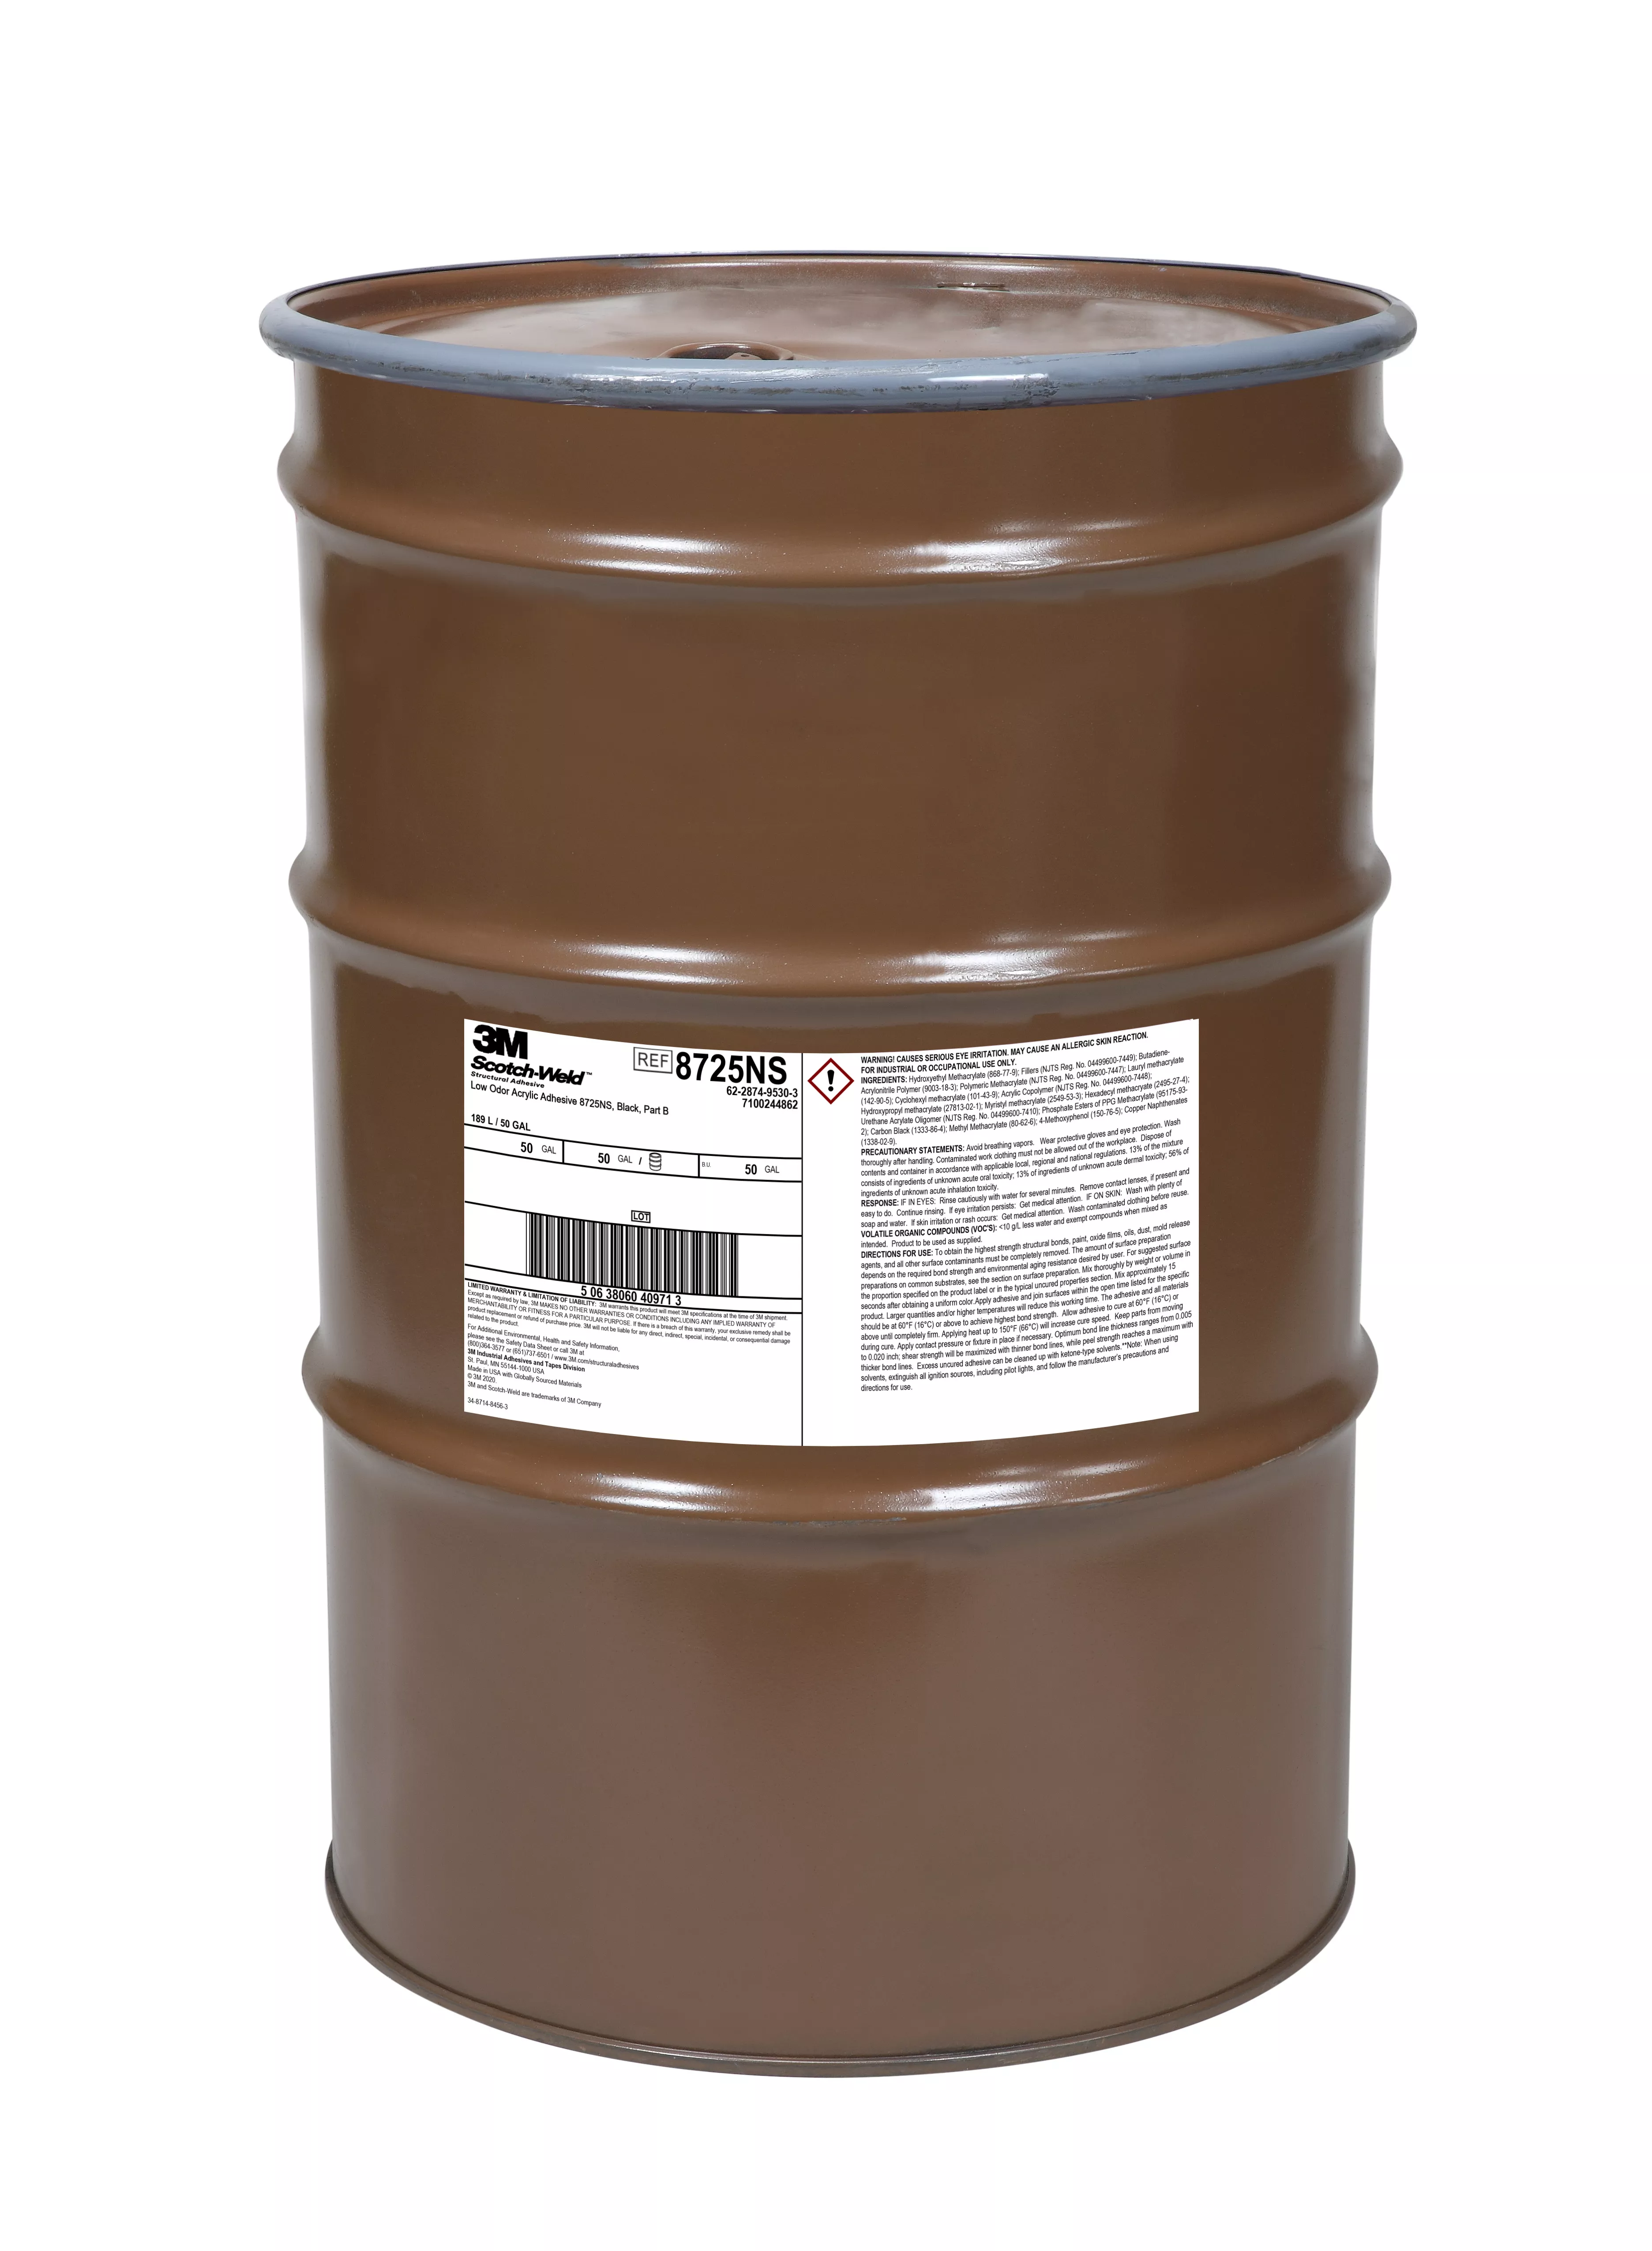 3M™ Scotch-Weld™ Low Odor Acrylic Adhesive 8725NS, Black, Part B, 55
Gallon (50 Gallon Net), Drum